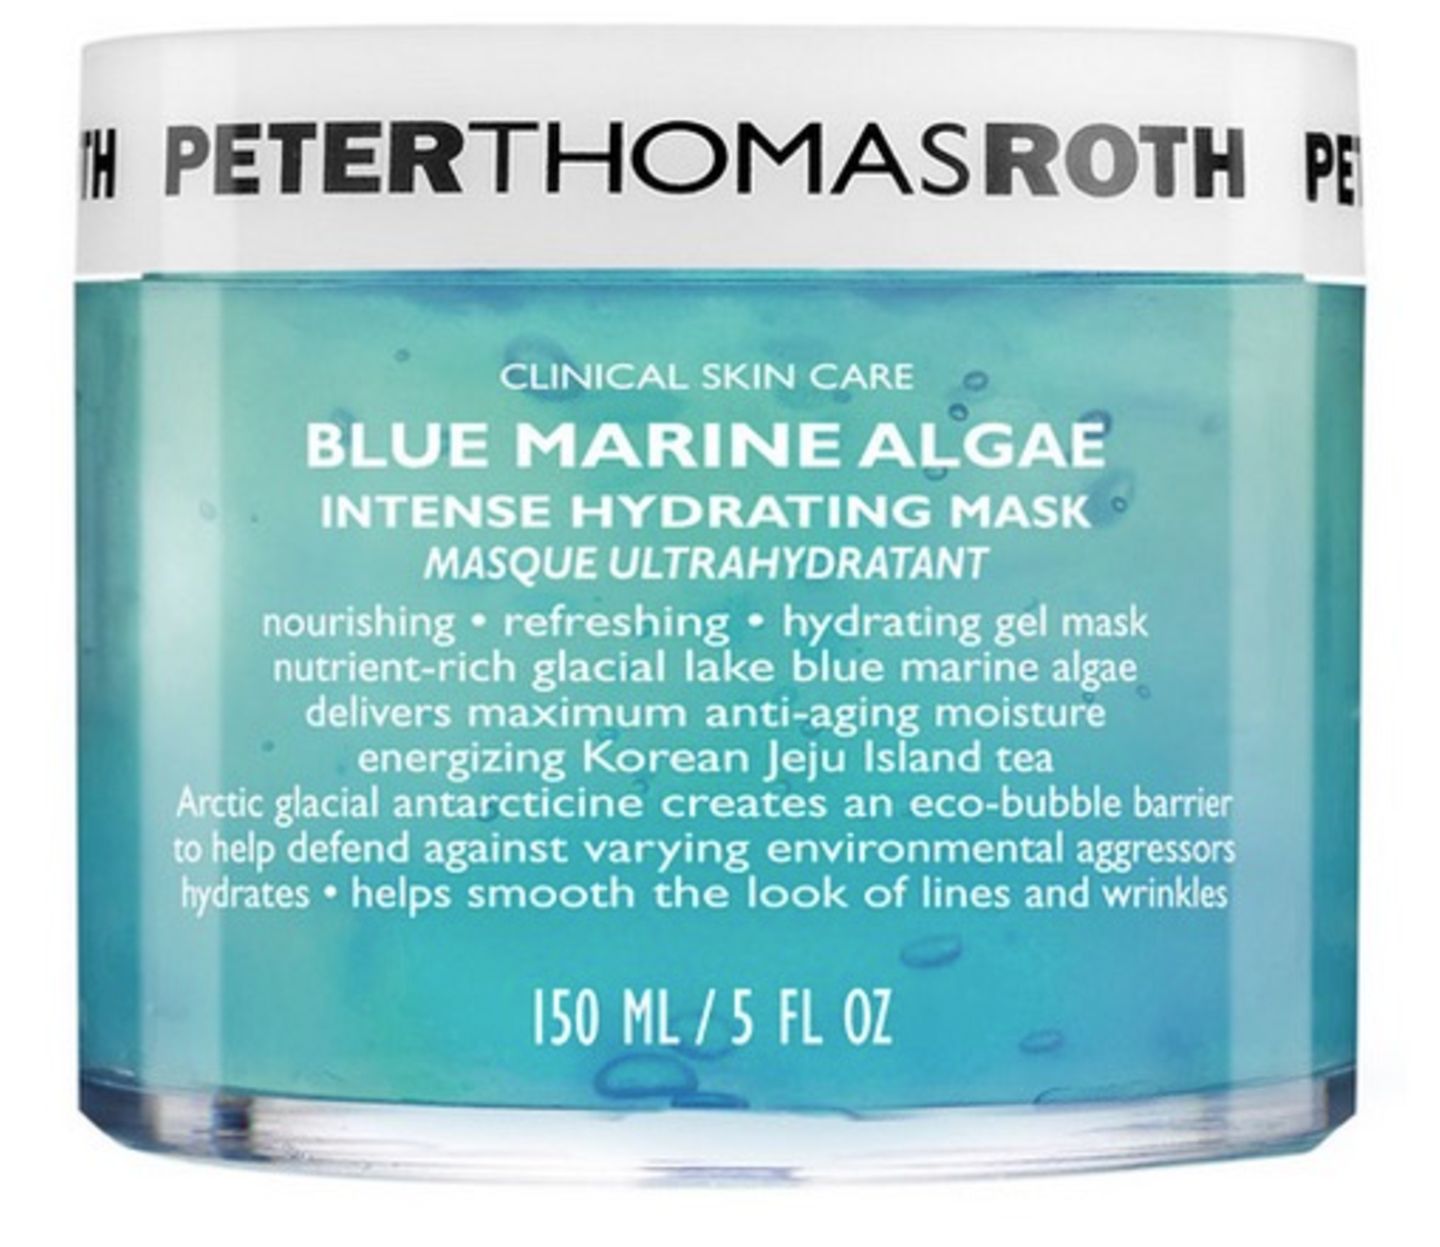 "Blue Marine Algae" Peter Thomas Roth